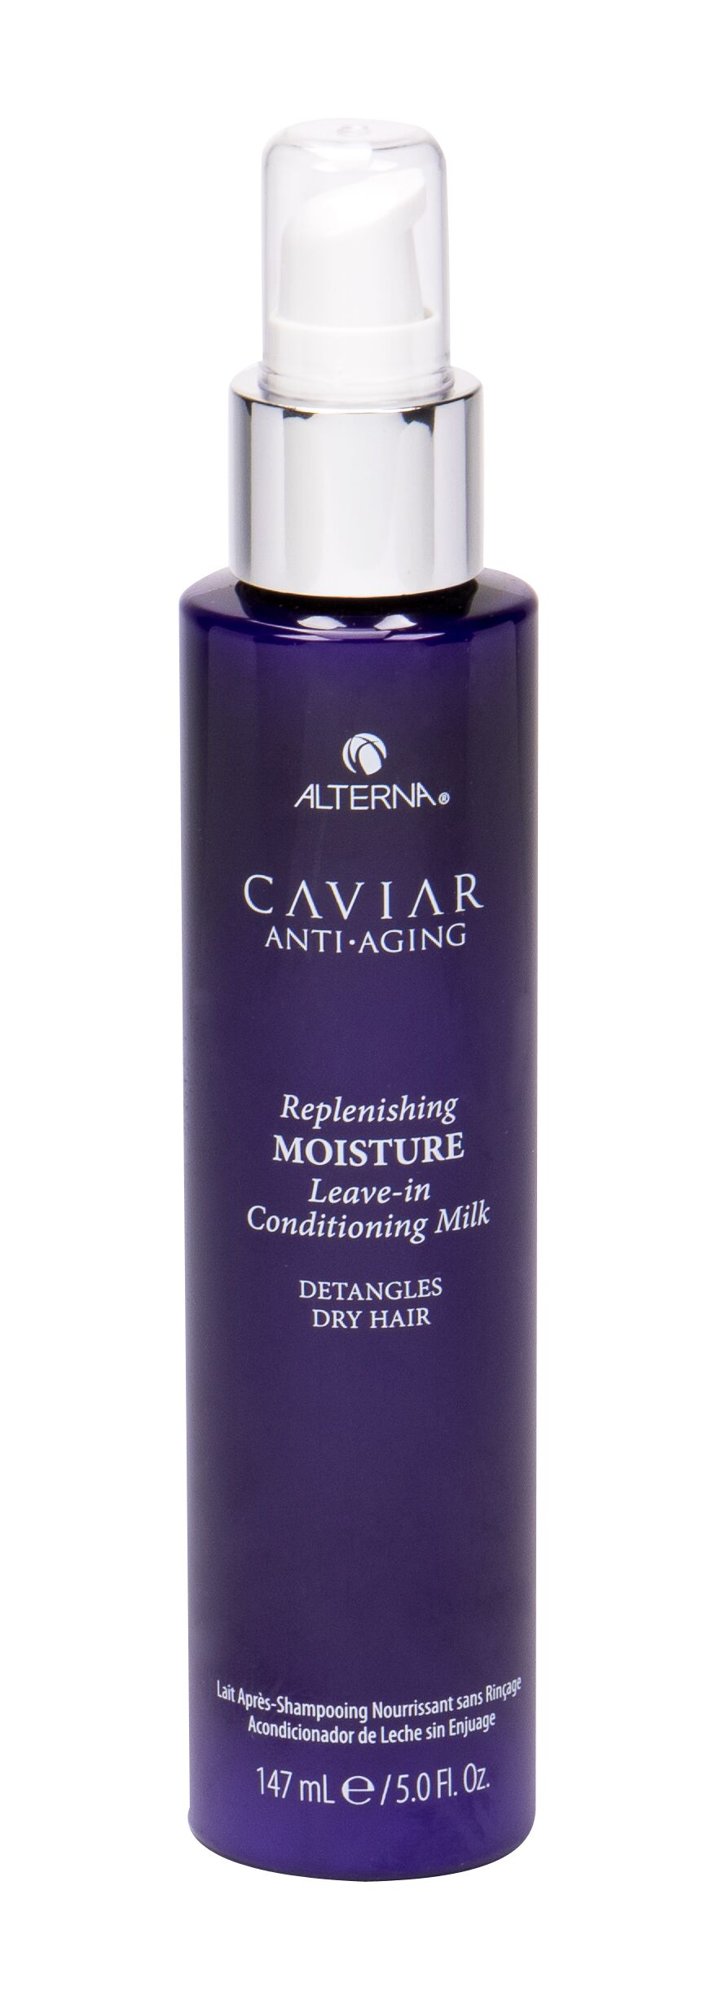 Alterna Caviar Anti-Aging Replenishing Moisture Milk kondicionierius